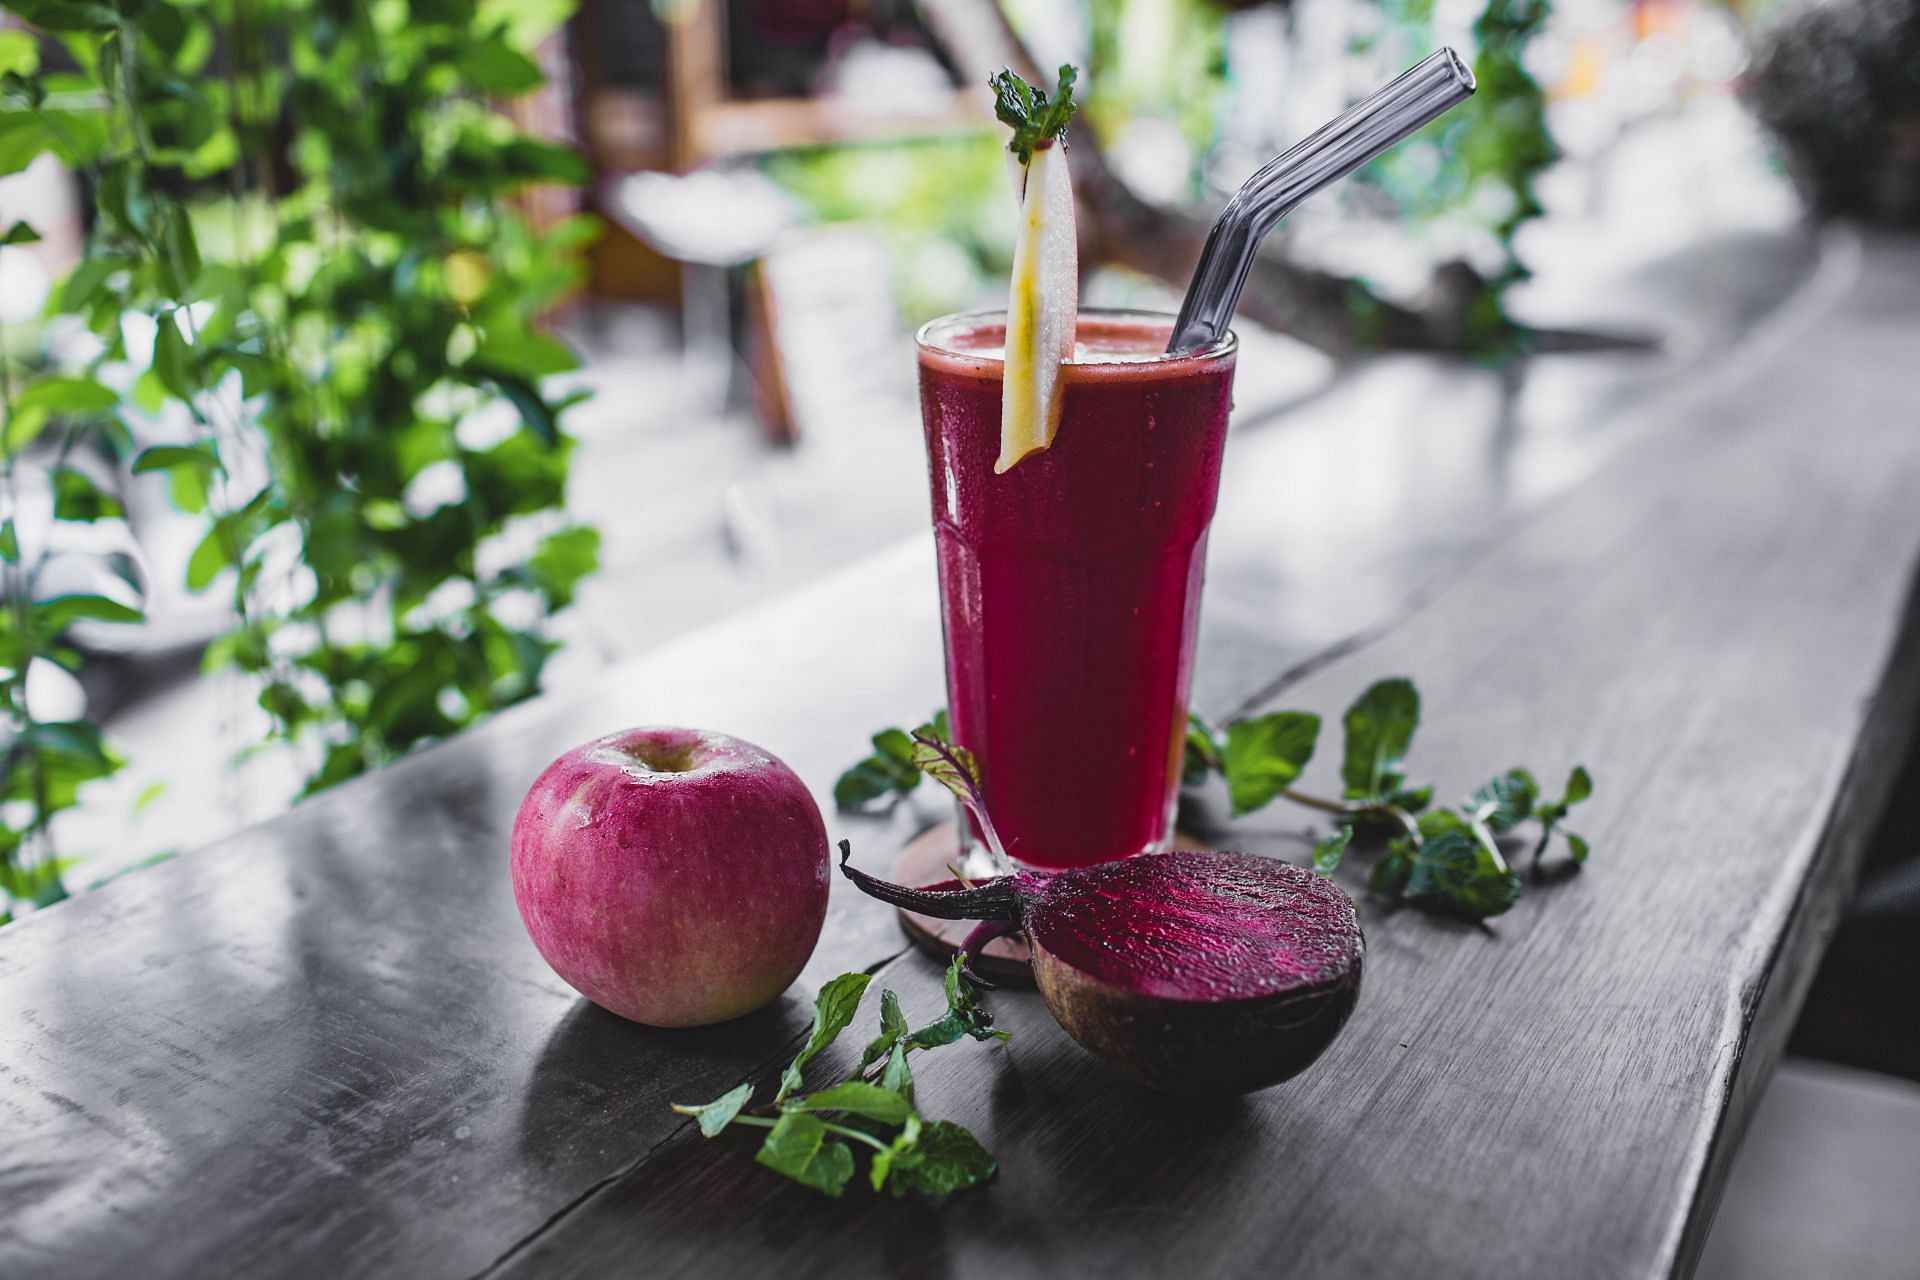 Apple juice is a popular beverage made from apples (Image via Pexels)